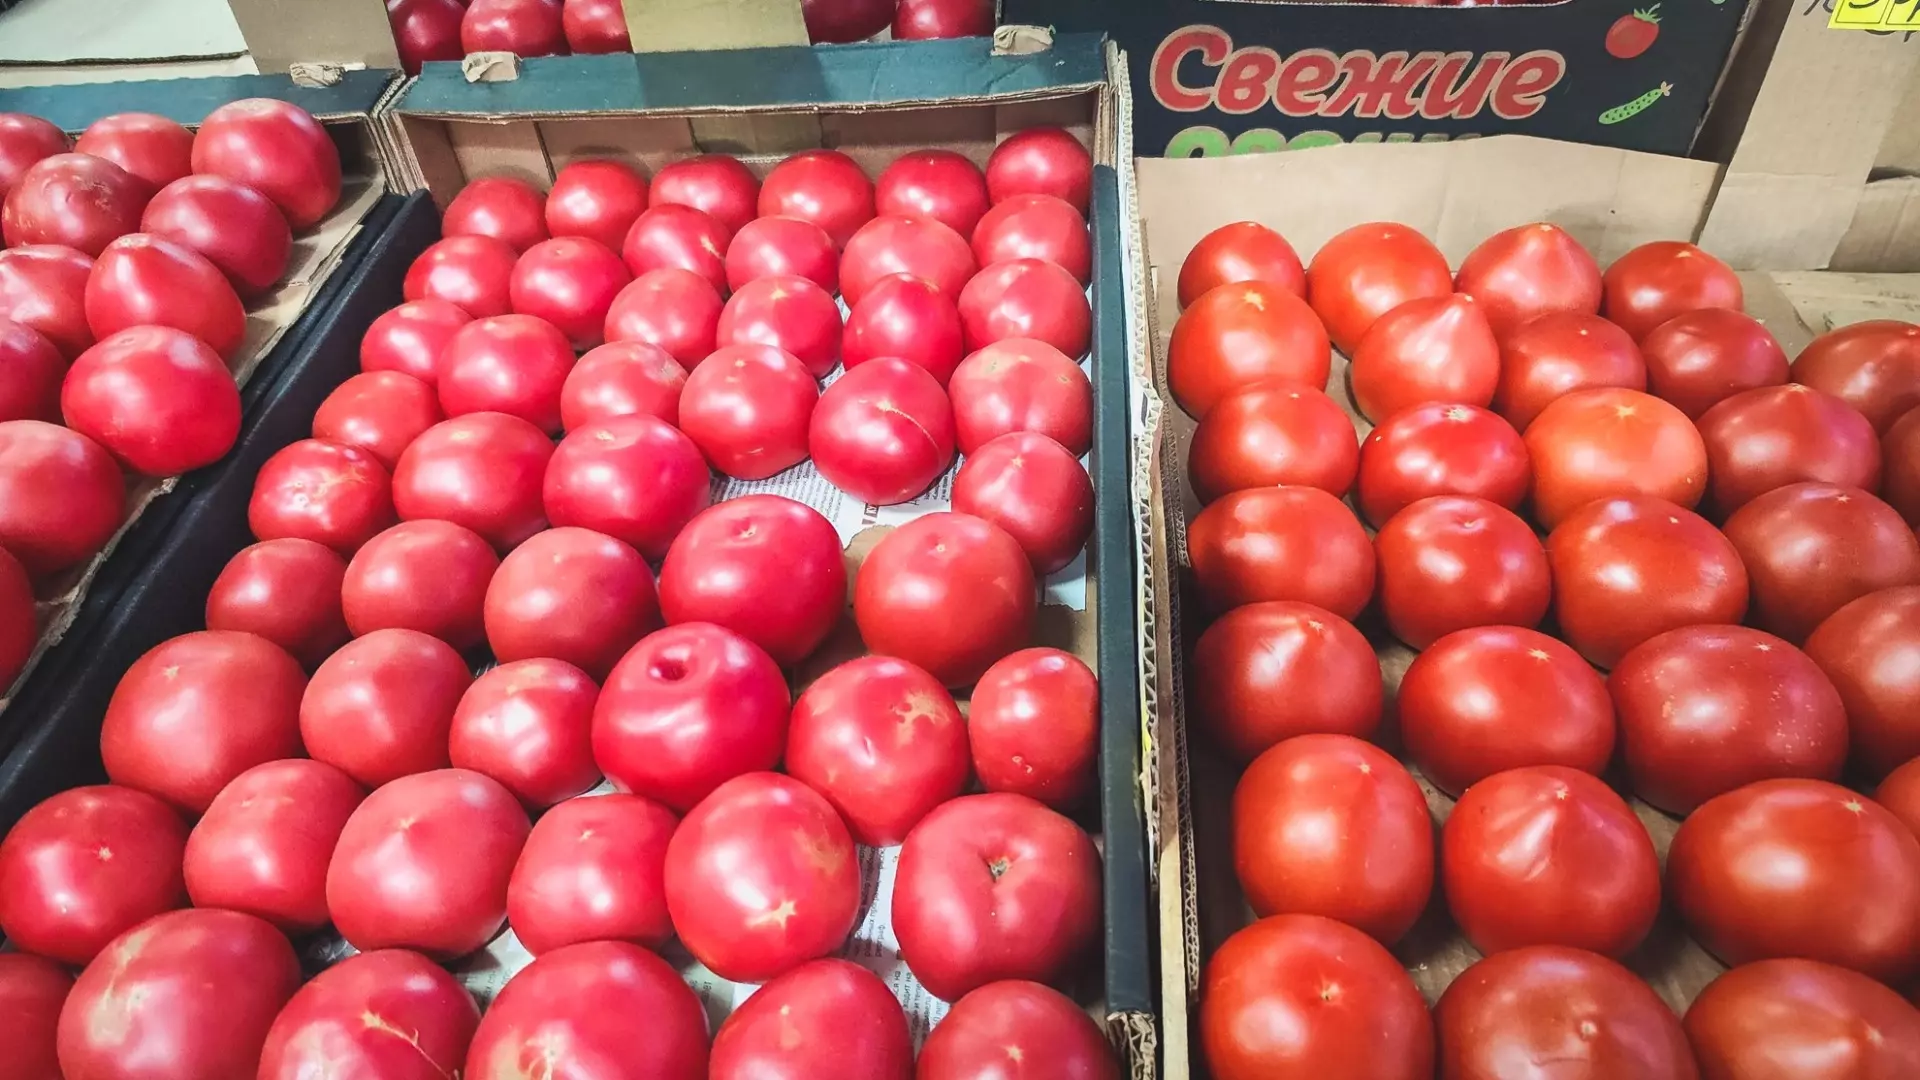 Цены на свежие овощи обновили рекорд в Волгограде